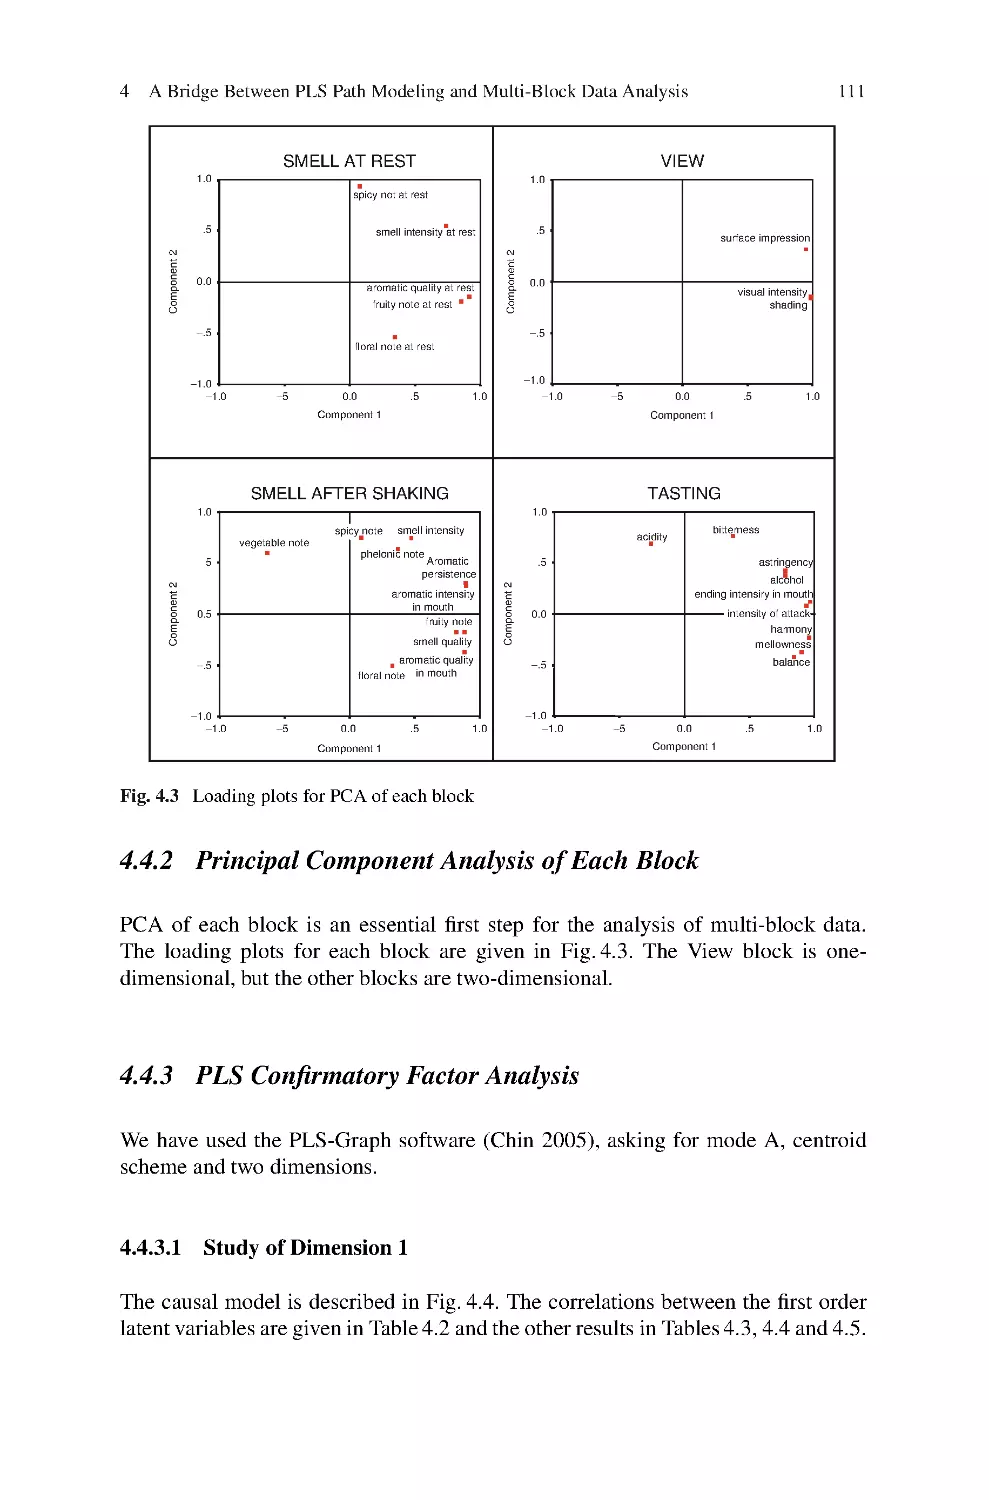 4.4.2 Principal Component Analysis of Each Block
4.4.3 PLS Confirmatory Factor Analysis